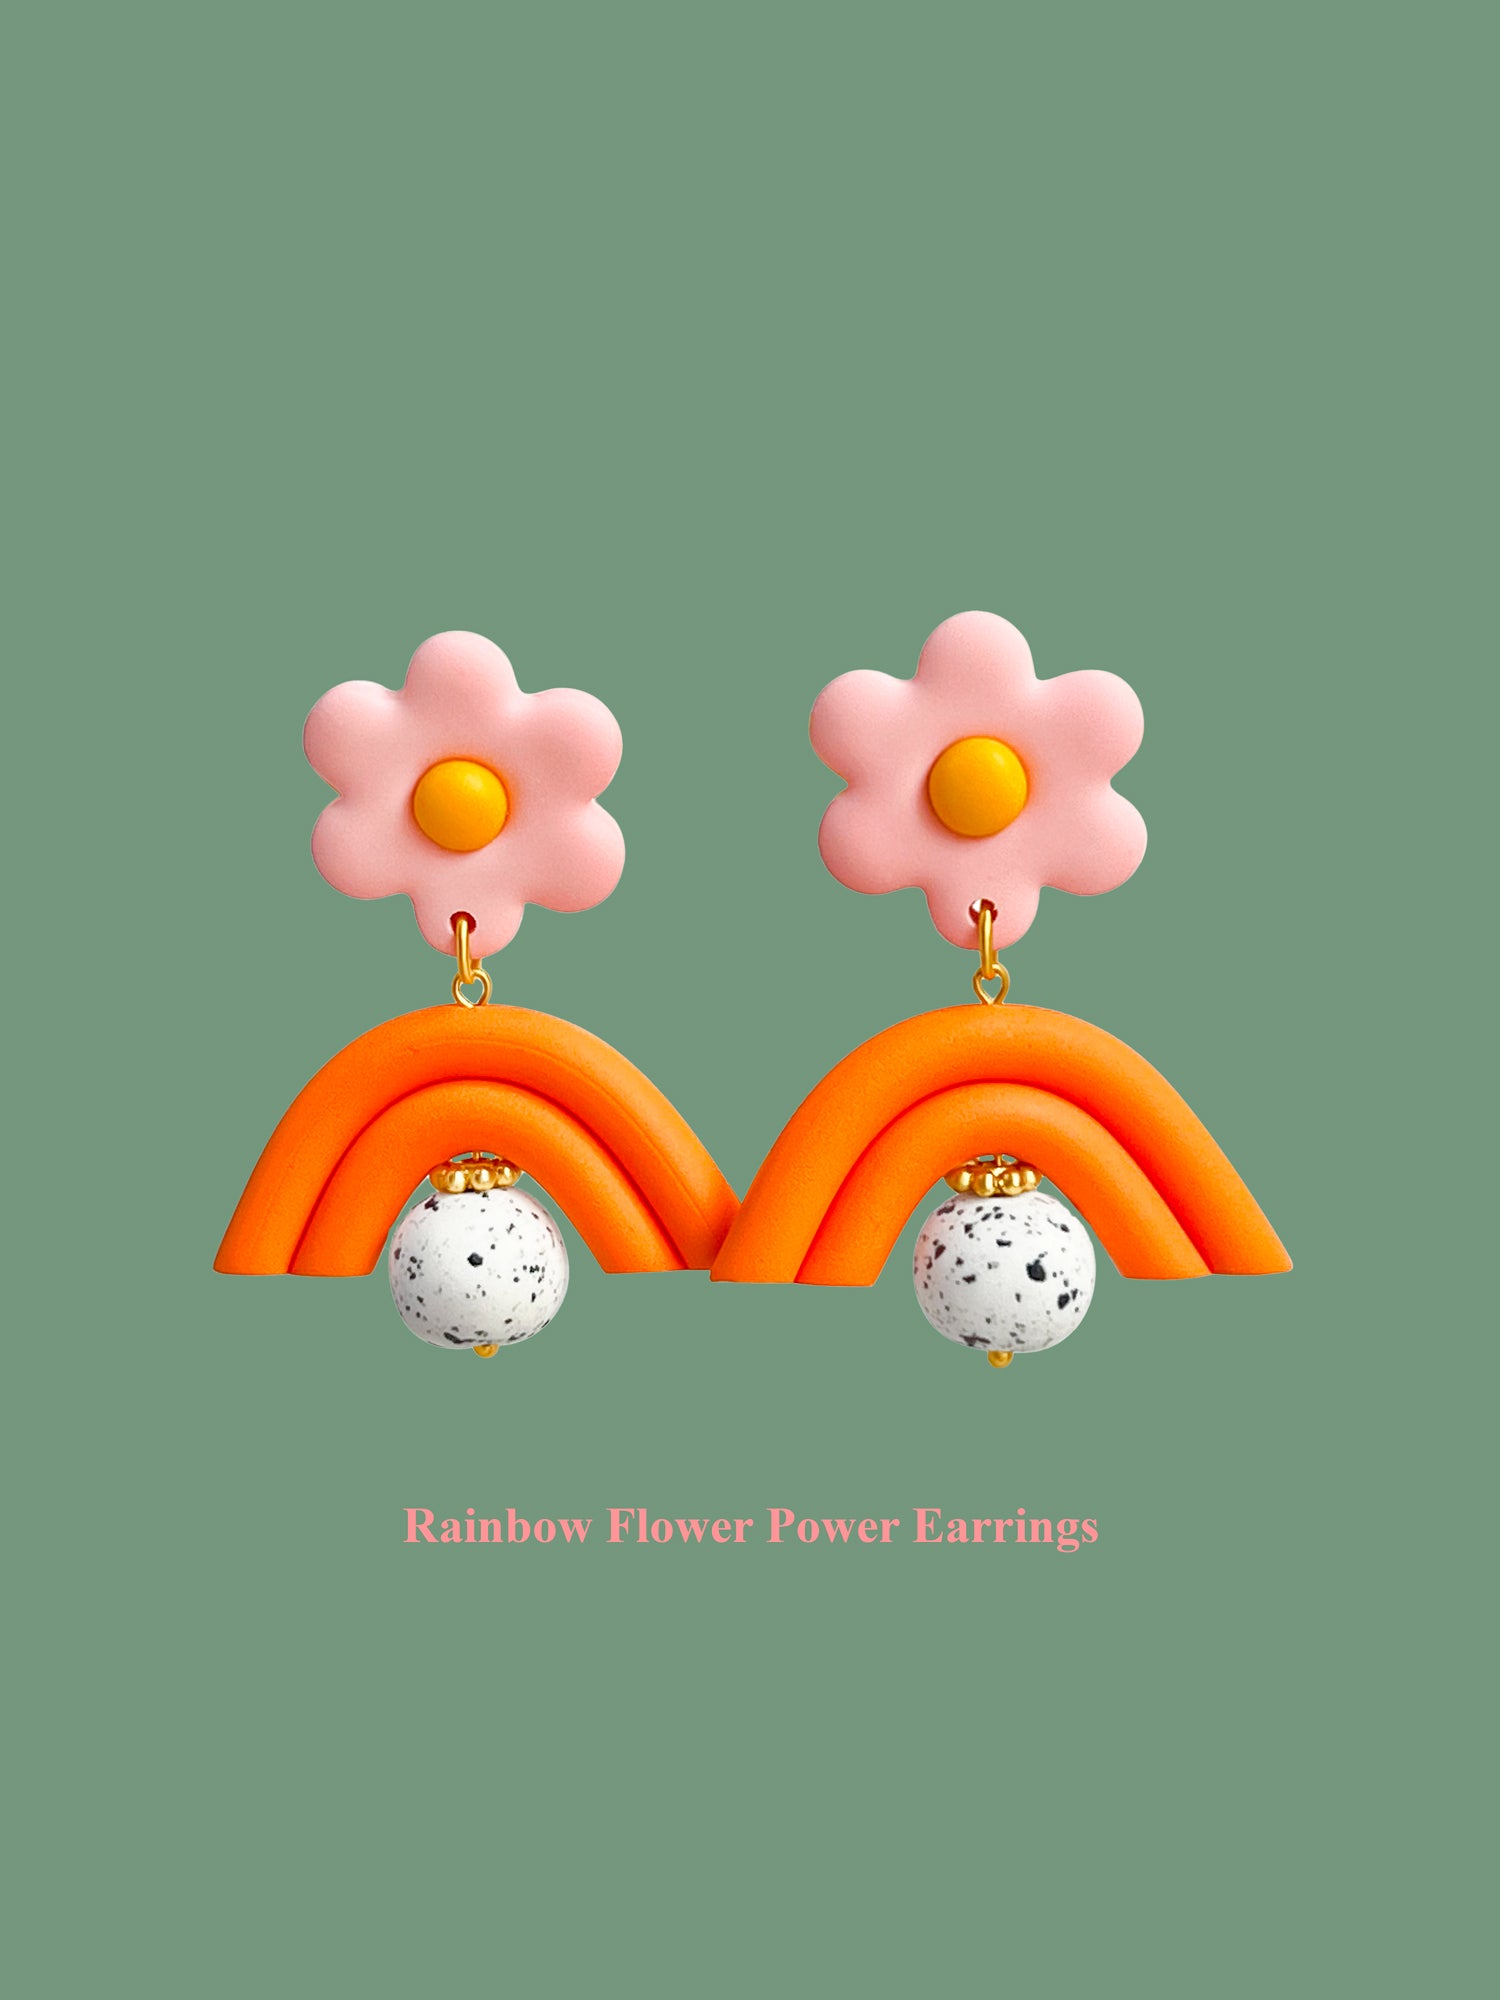 Rainbow Flower Power Earrings text